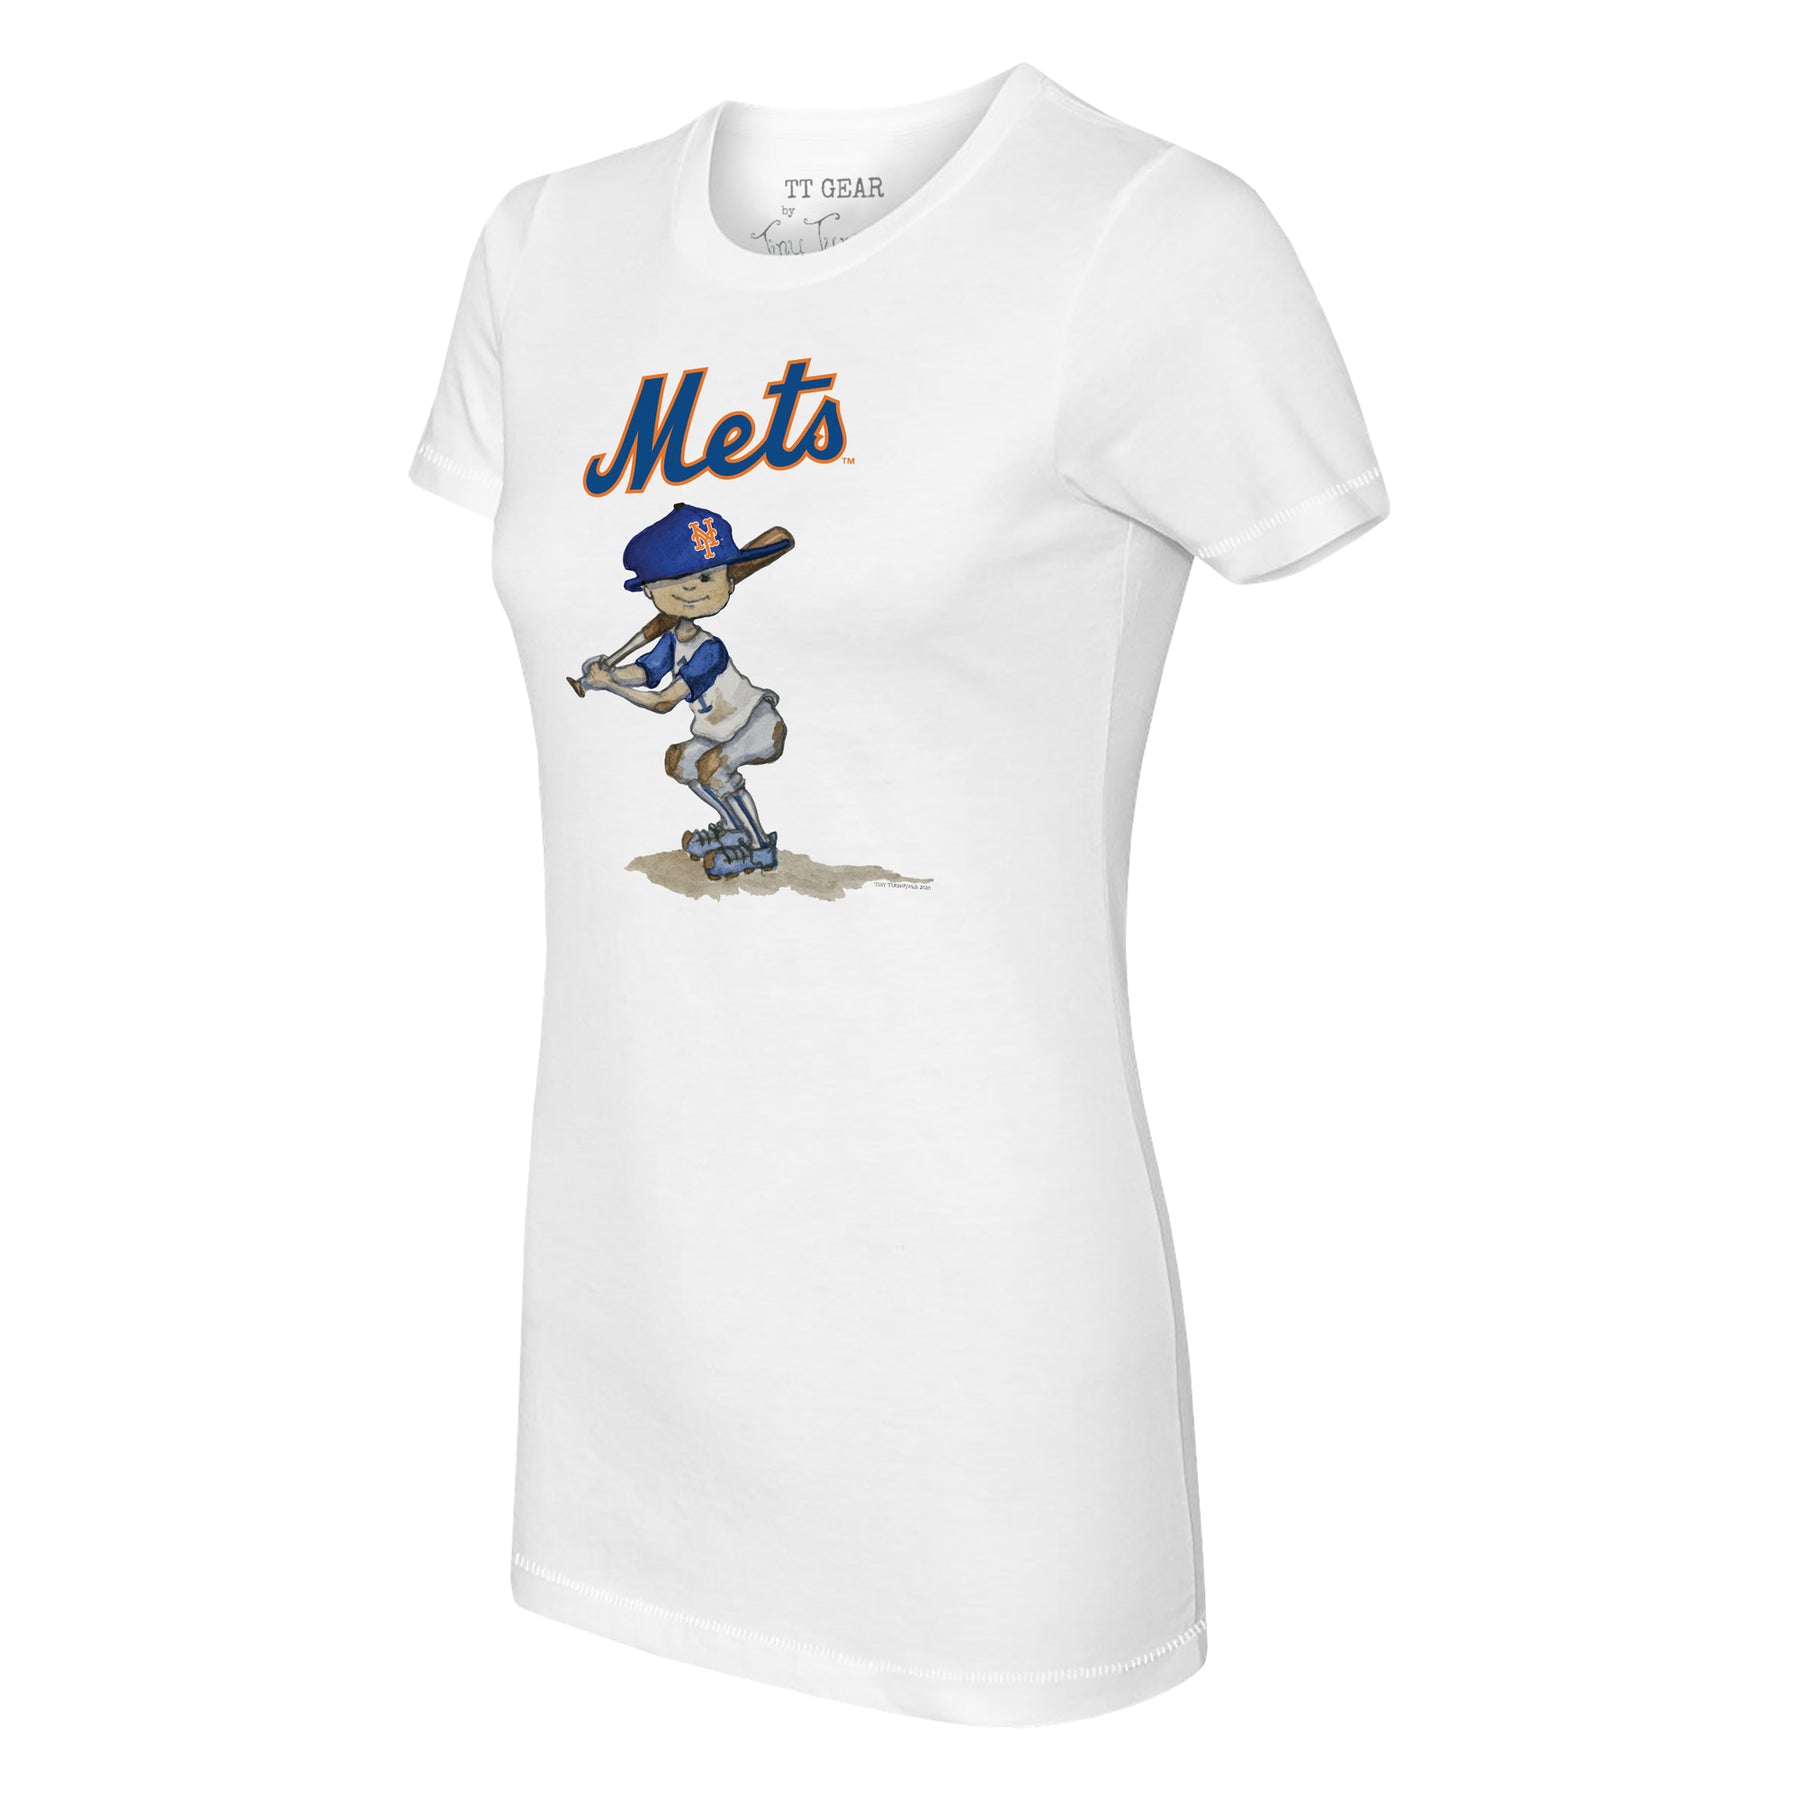 New York Mets Slugger Tee Shirt Youth Medium (8-10) / White